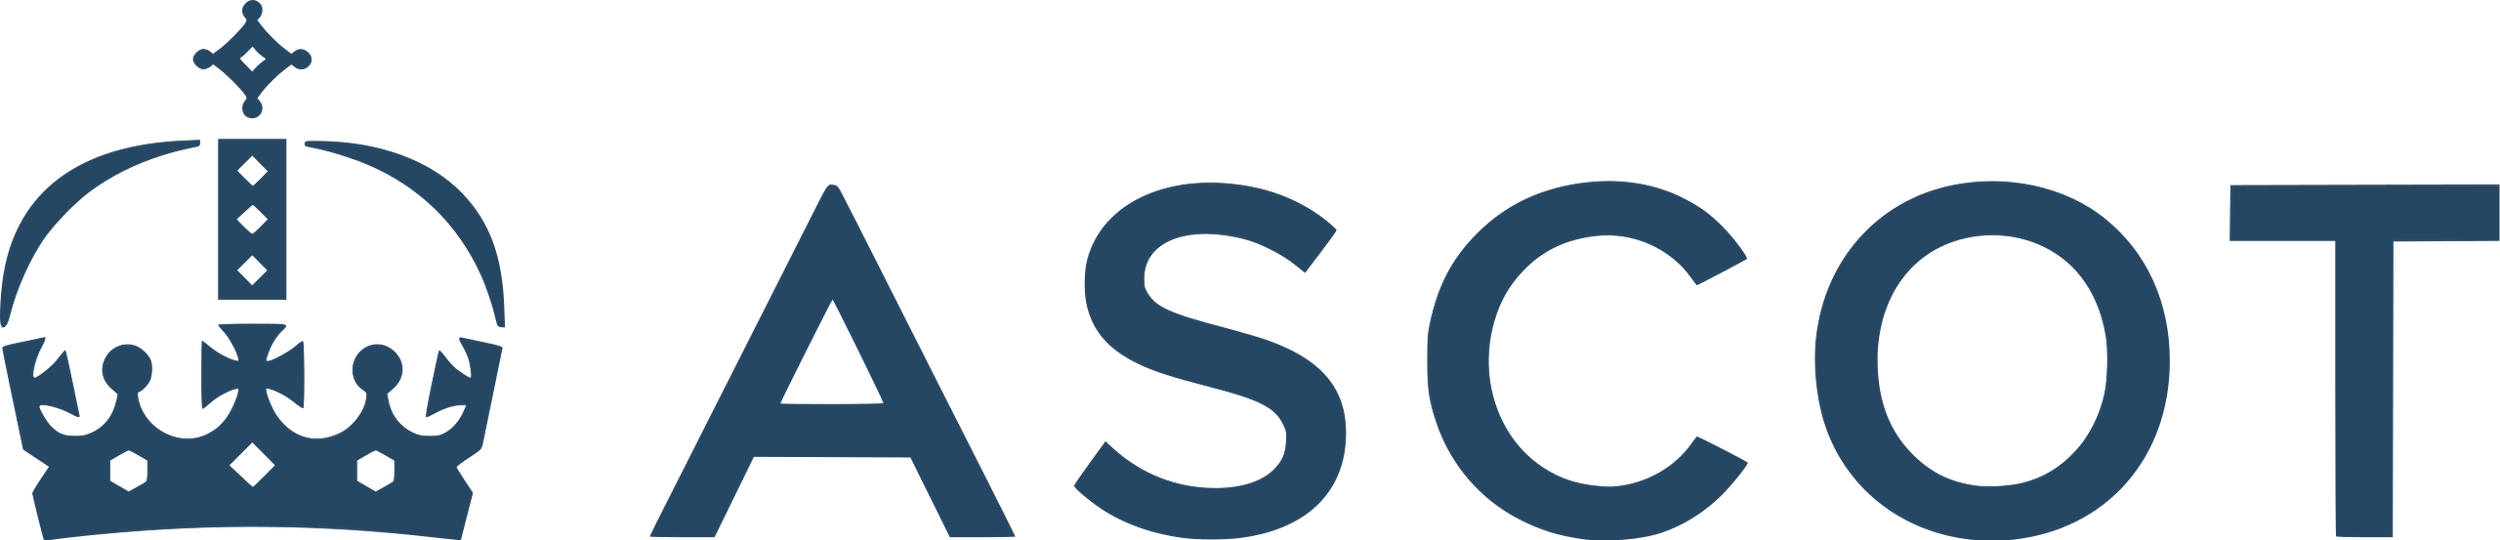 Ascot_logo.svg.png